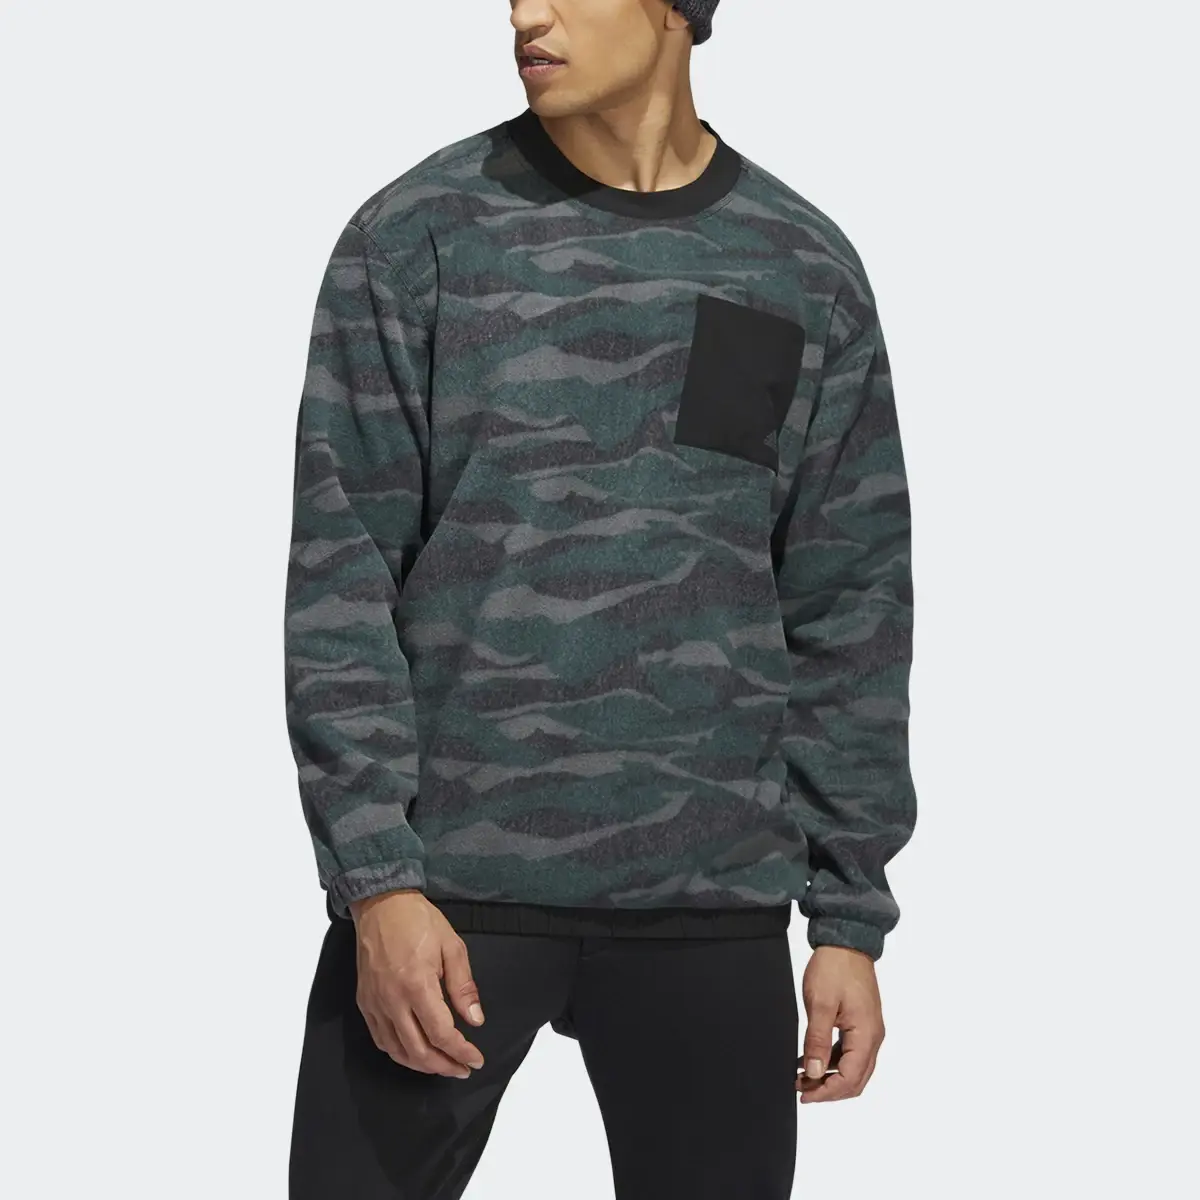 Adidas Texture-Print Crew Sweatshirt. 1